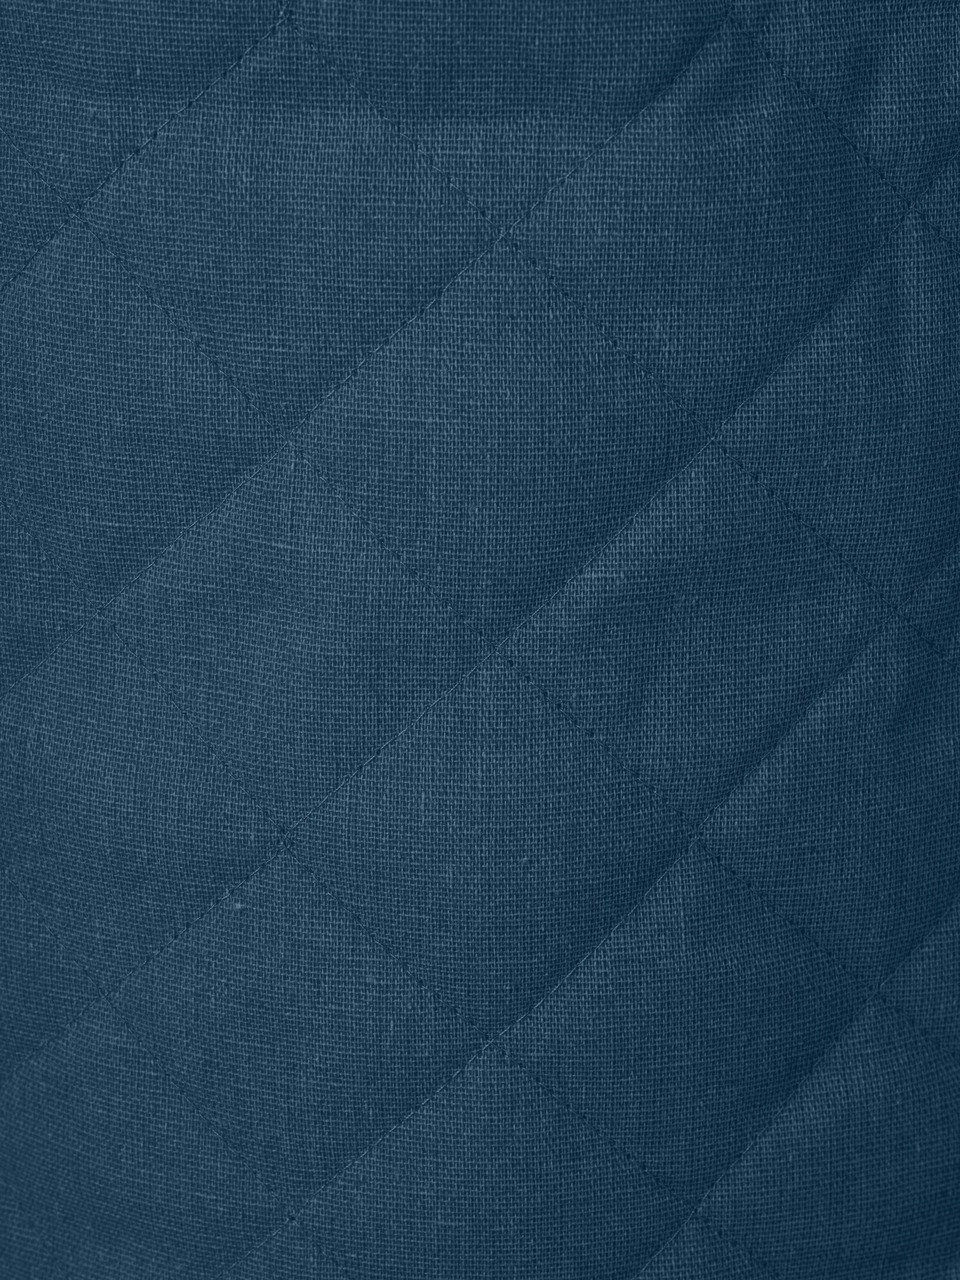 Waffeldesign TAILOR Zwei Wäschekorb Griffe, 1x Wäschetasche Navy TOM Faltbar Waffel-Muster, (1 Wäschesammler), Wäschesammler St., HOME